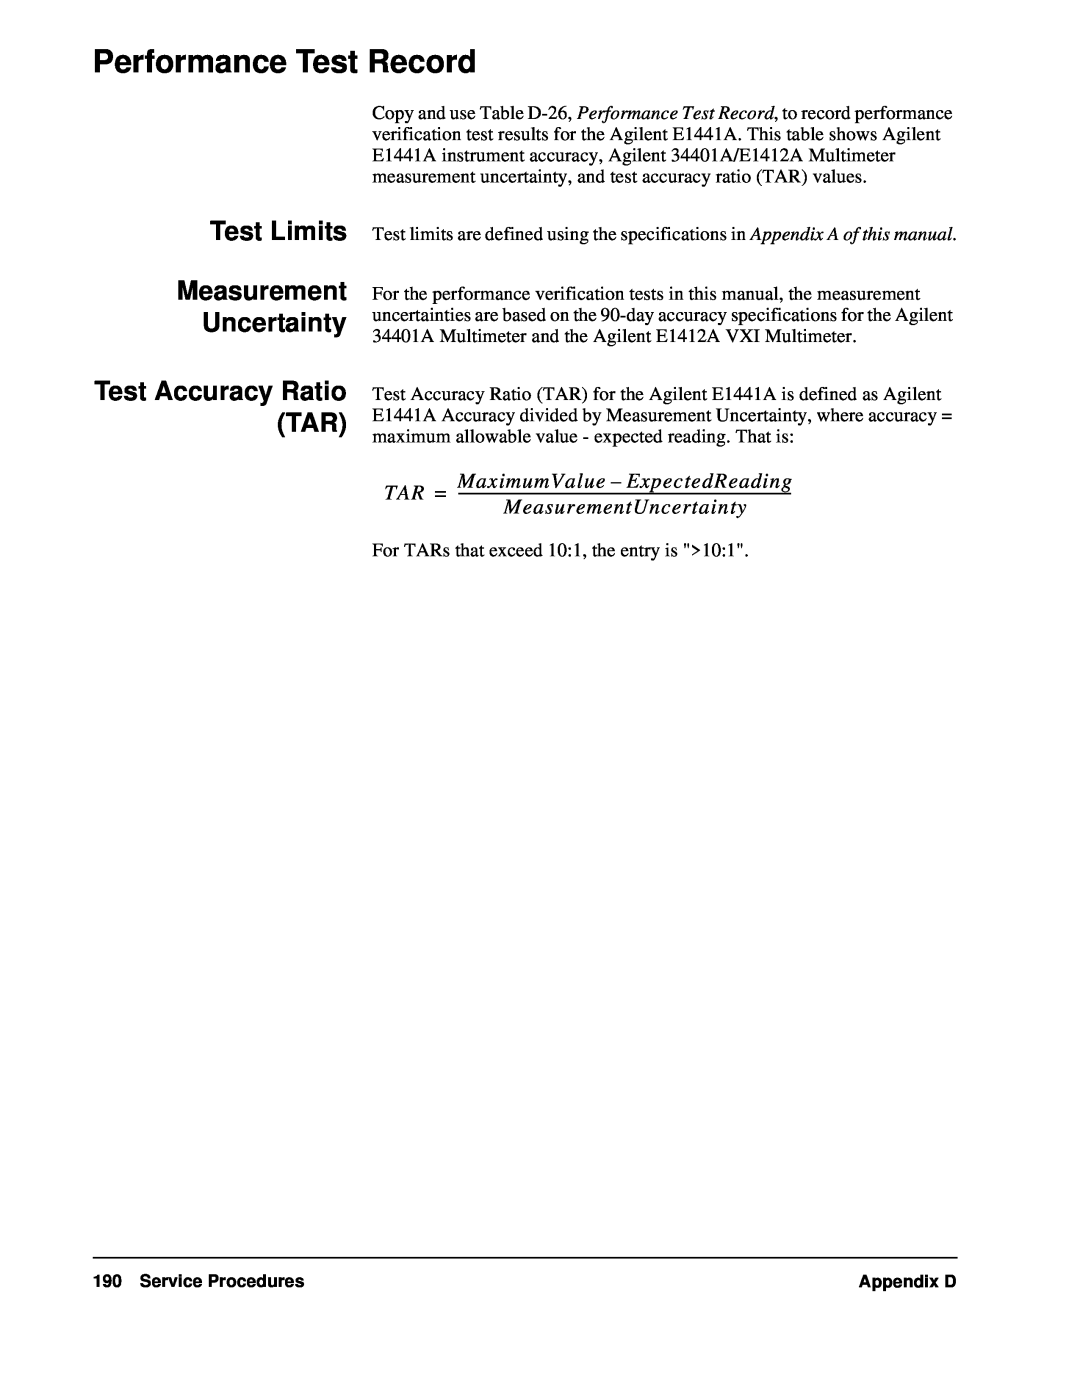 Agilent Technologies E1441A Performance Test Record, Test Limits Measurement Uncertainty, Test Accuracy Ratio TAR, Tar = 